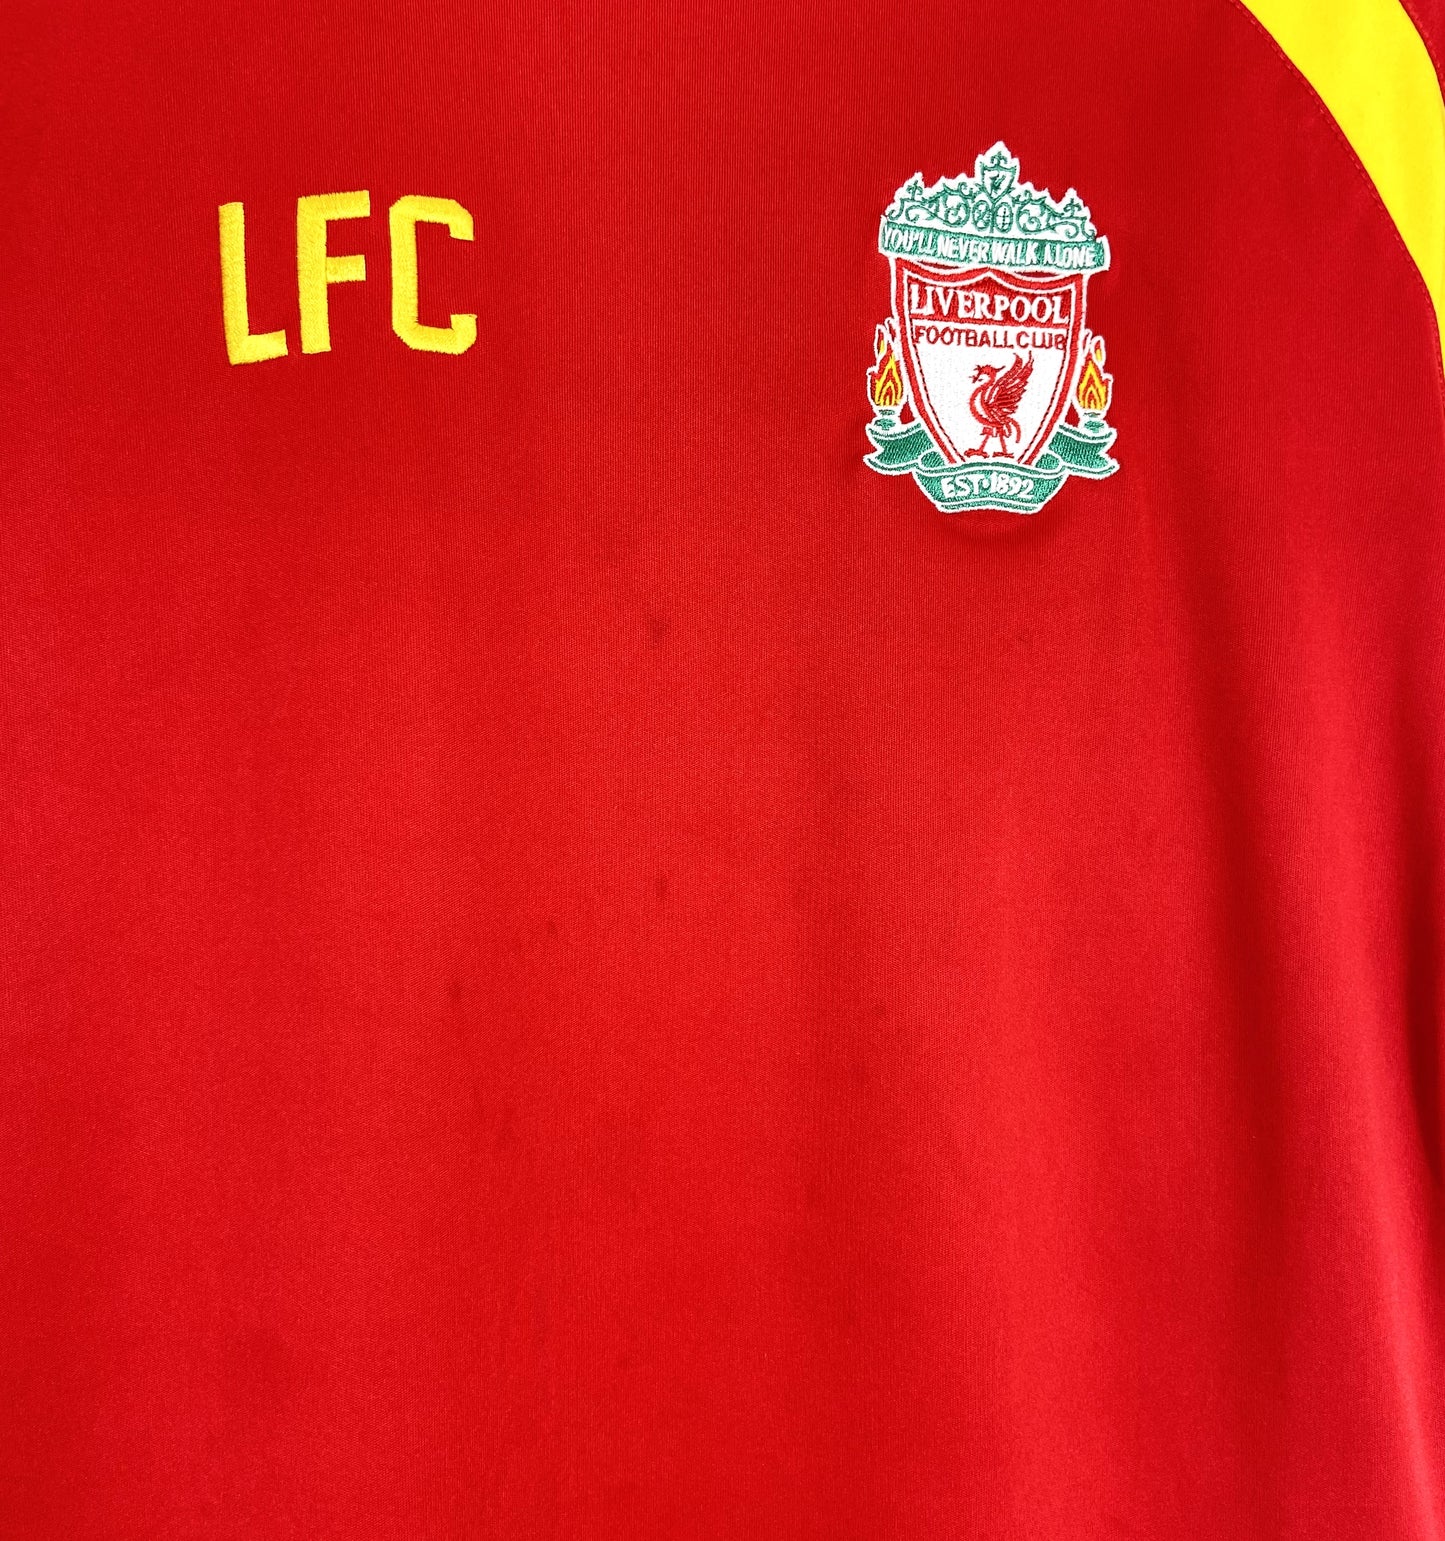 Liverpool LFC Football Shirt Kids 12-13 Years